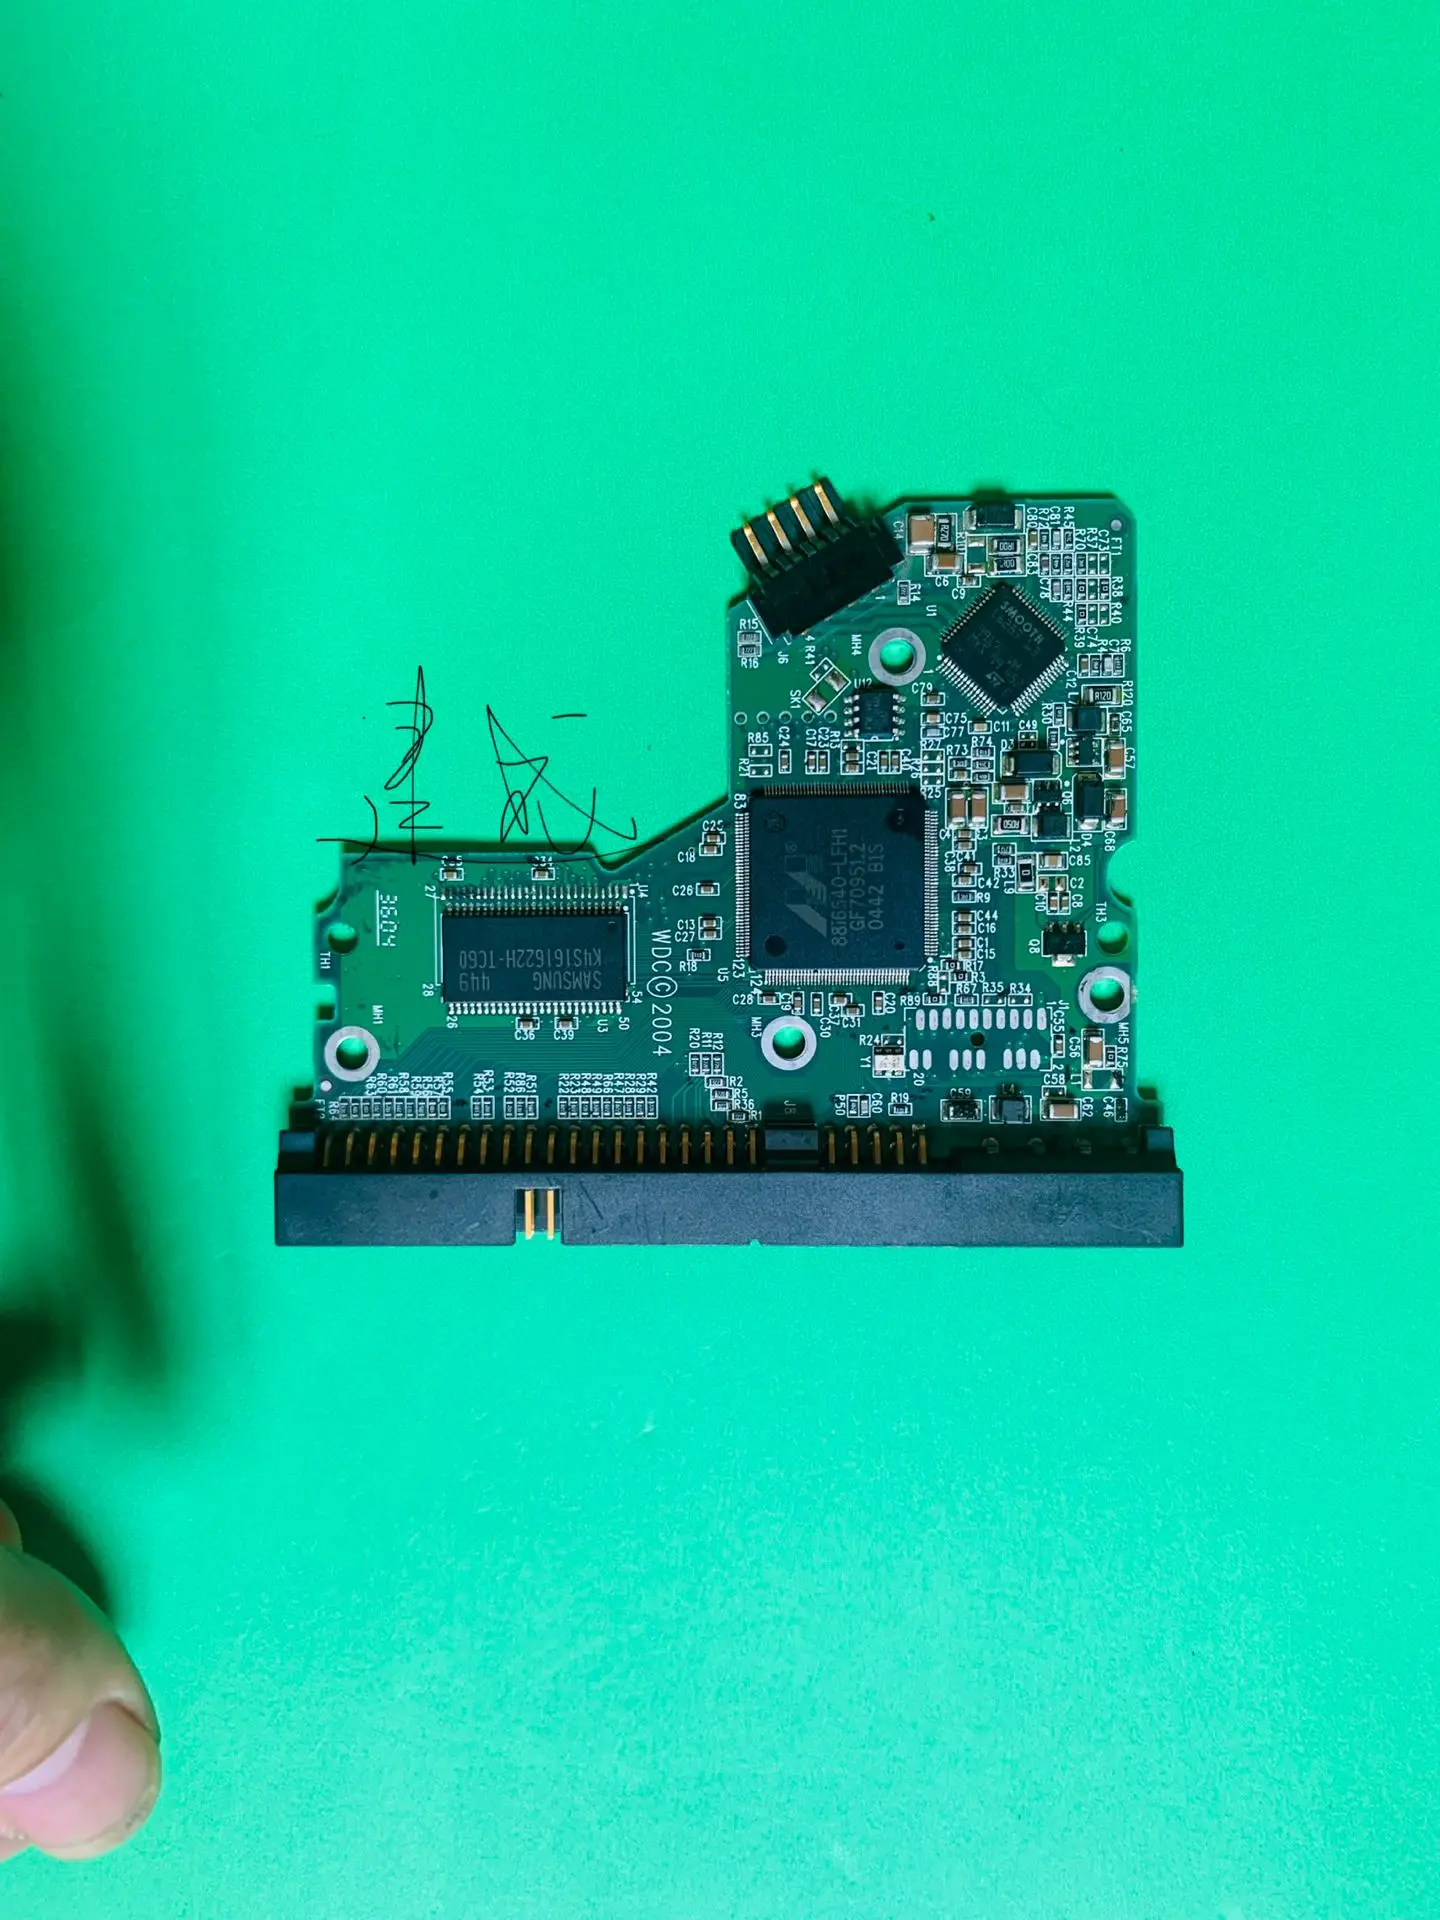 HDD PCB Logic Board 2060-001292-000 REV A untuk WD 3.5 IDE/PATA Hard Drive Repair Data Recovery WD800BB